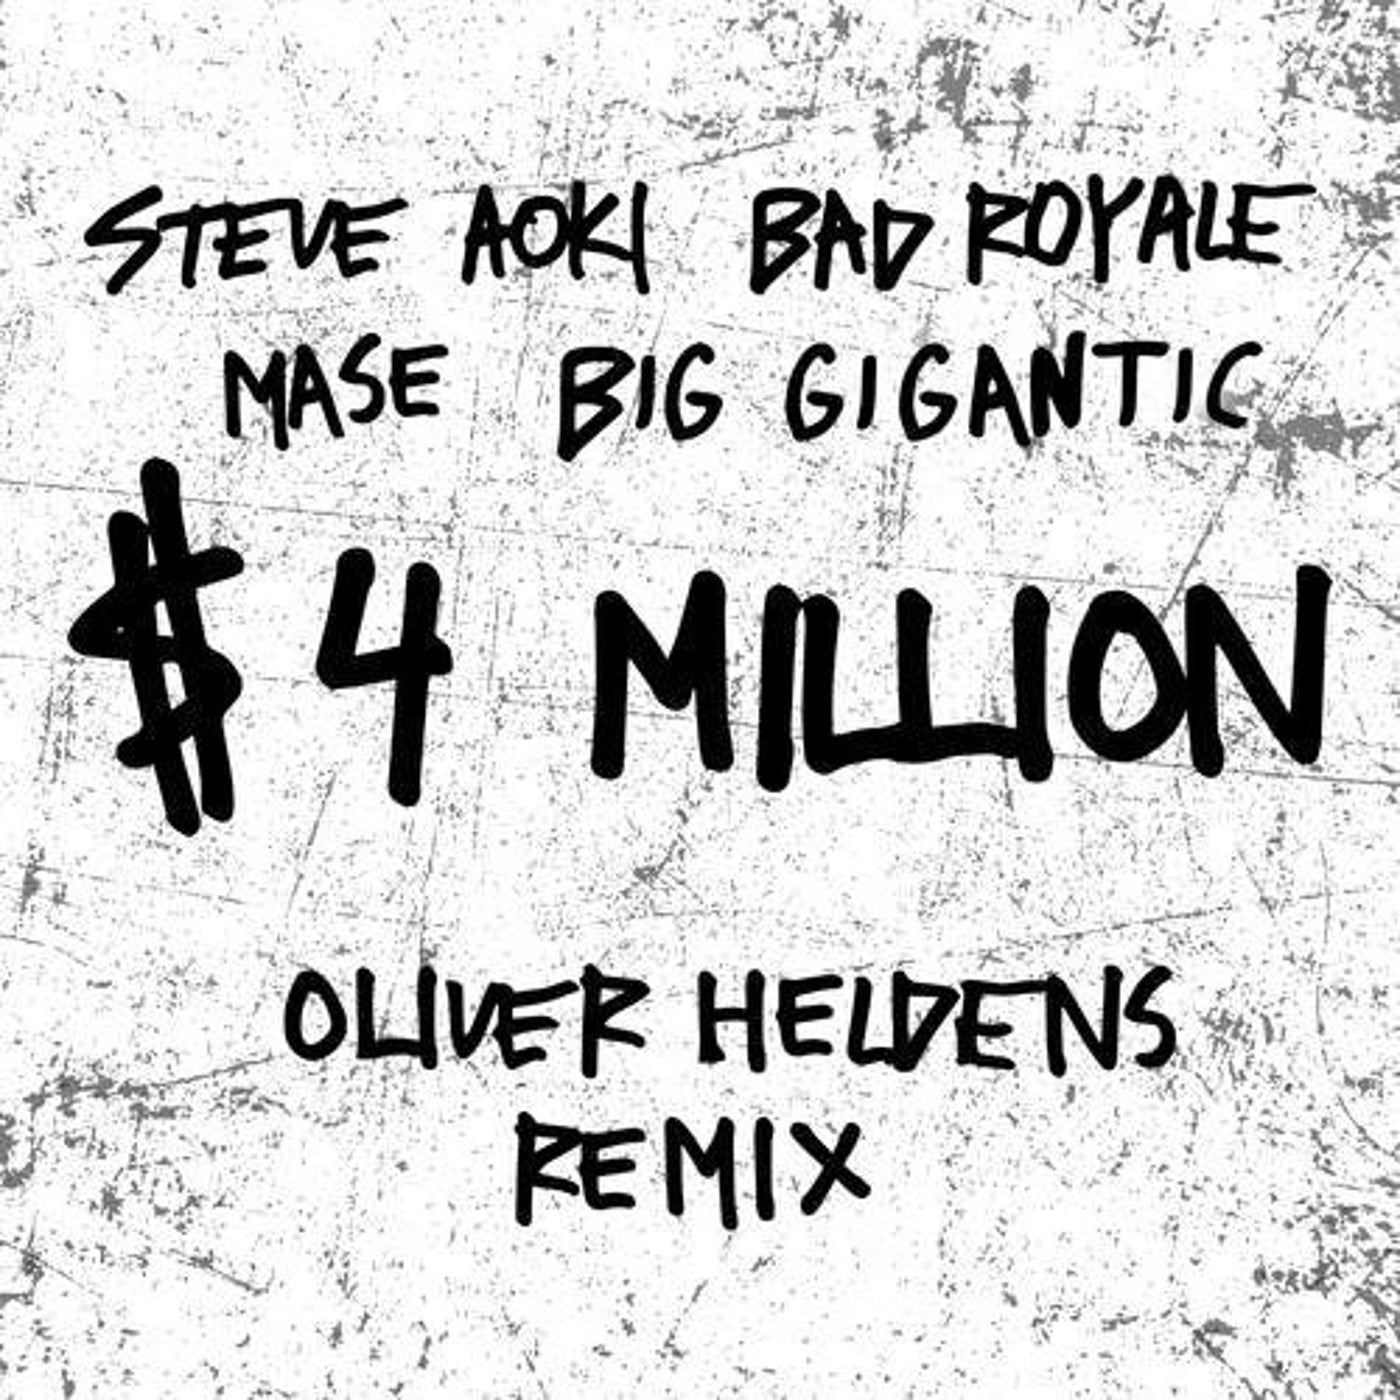 $4,000,000 (Oliver Heldens Extended Mix)